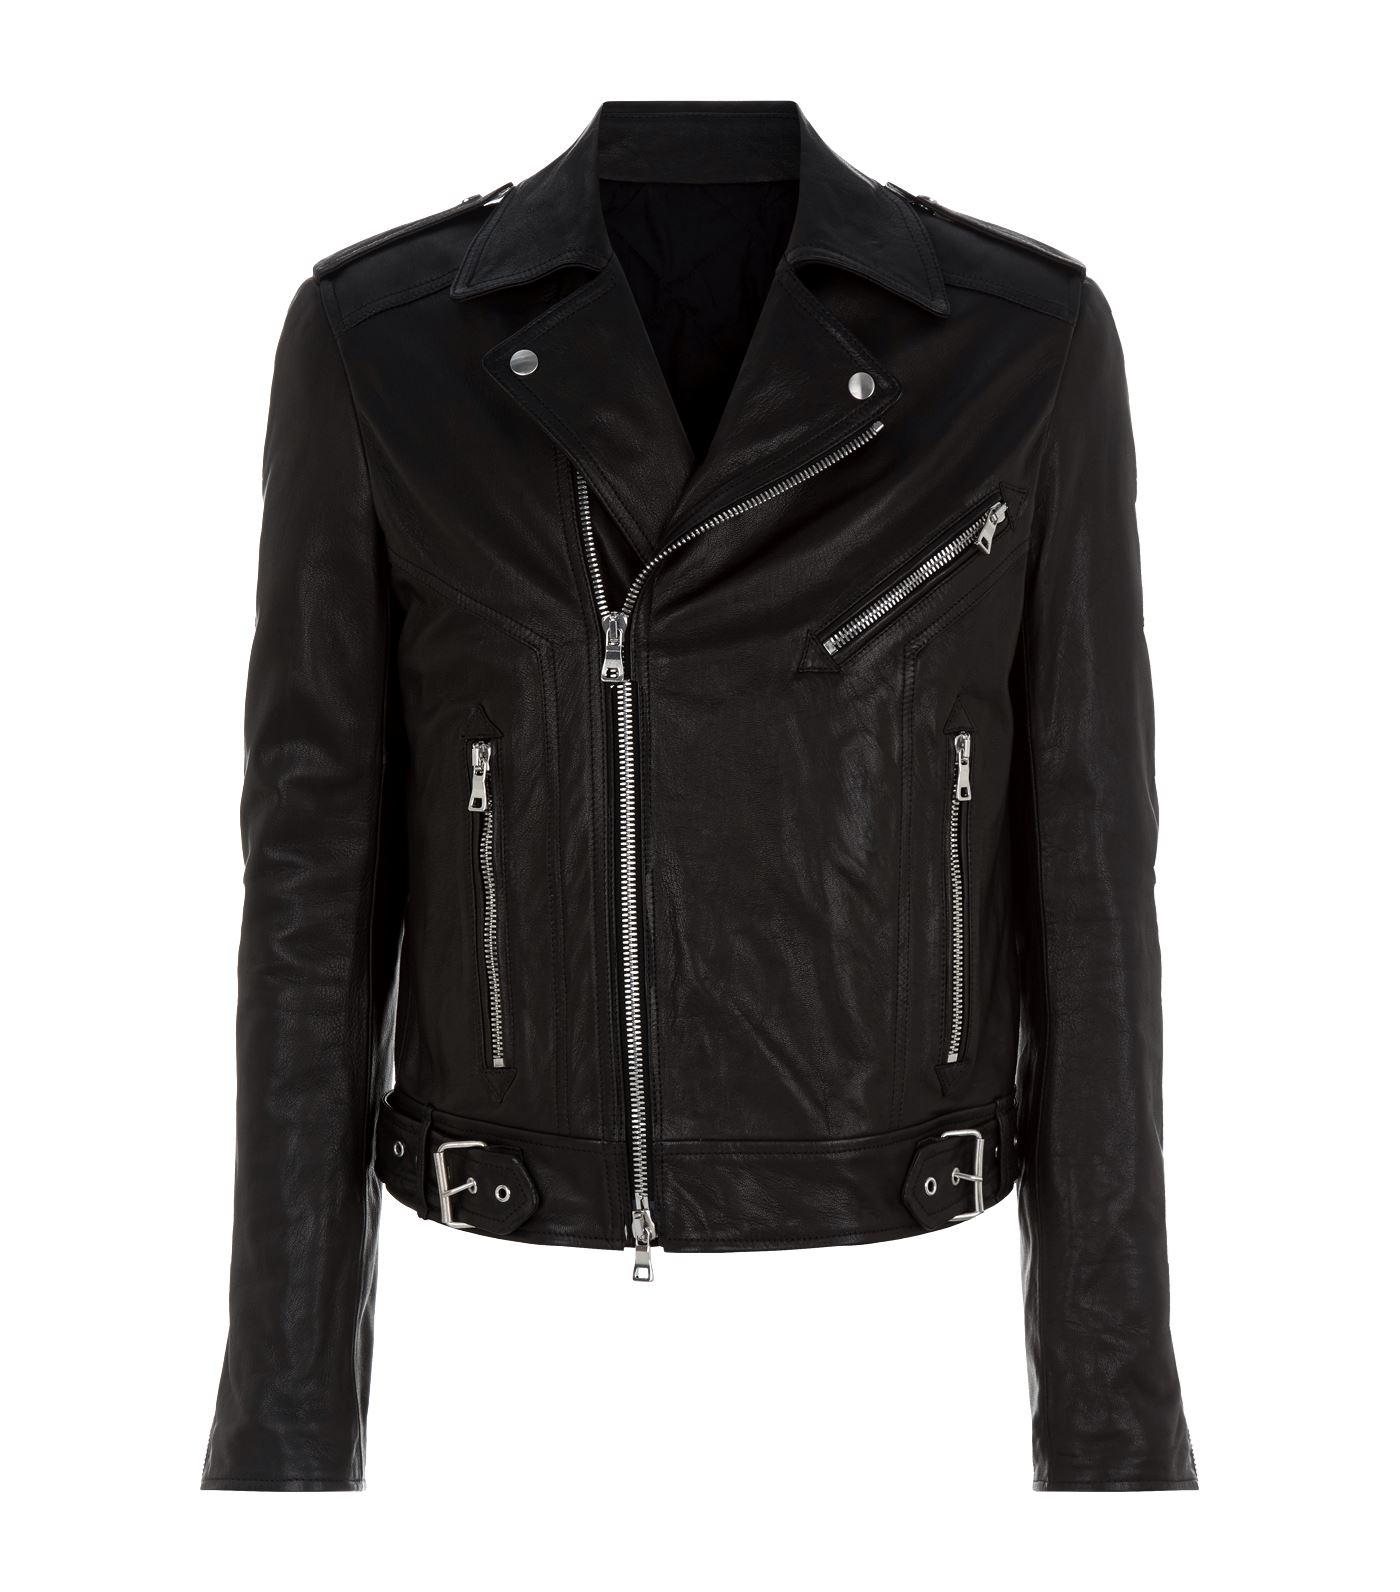 Balmain Logo Embossed Leather Jacket in Black for Men - Lyst